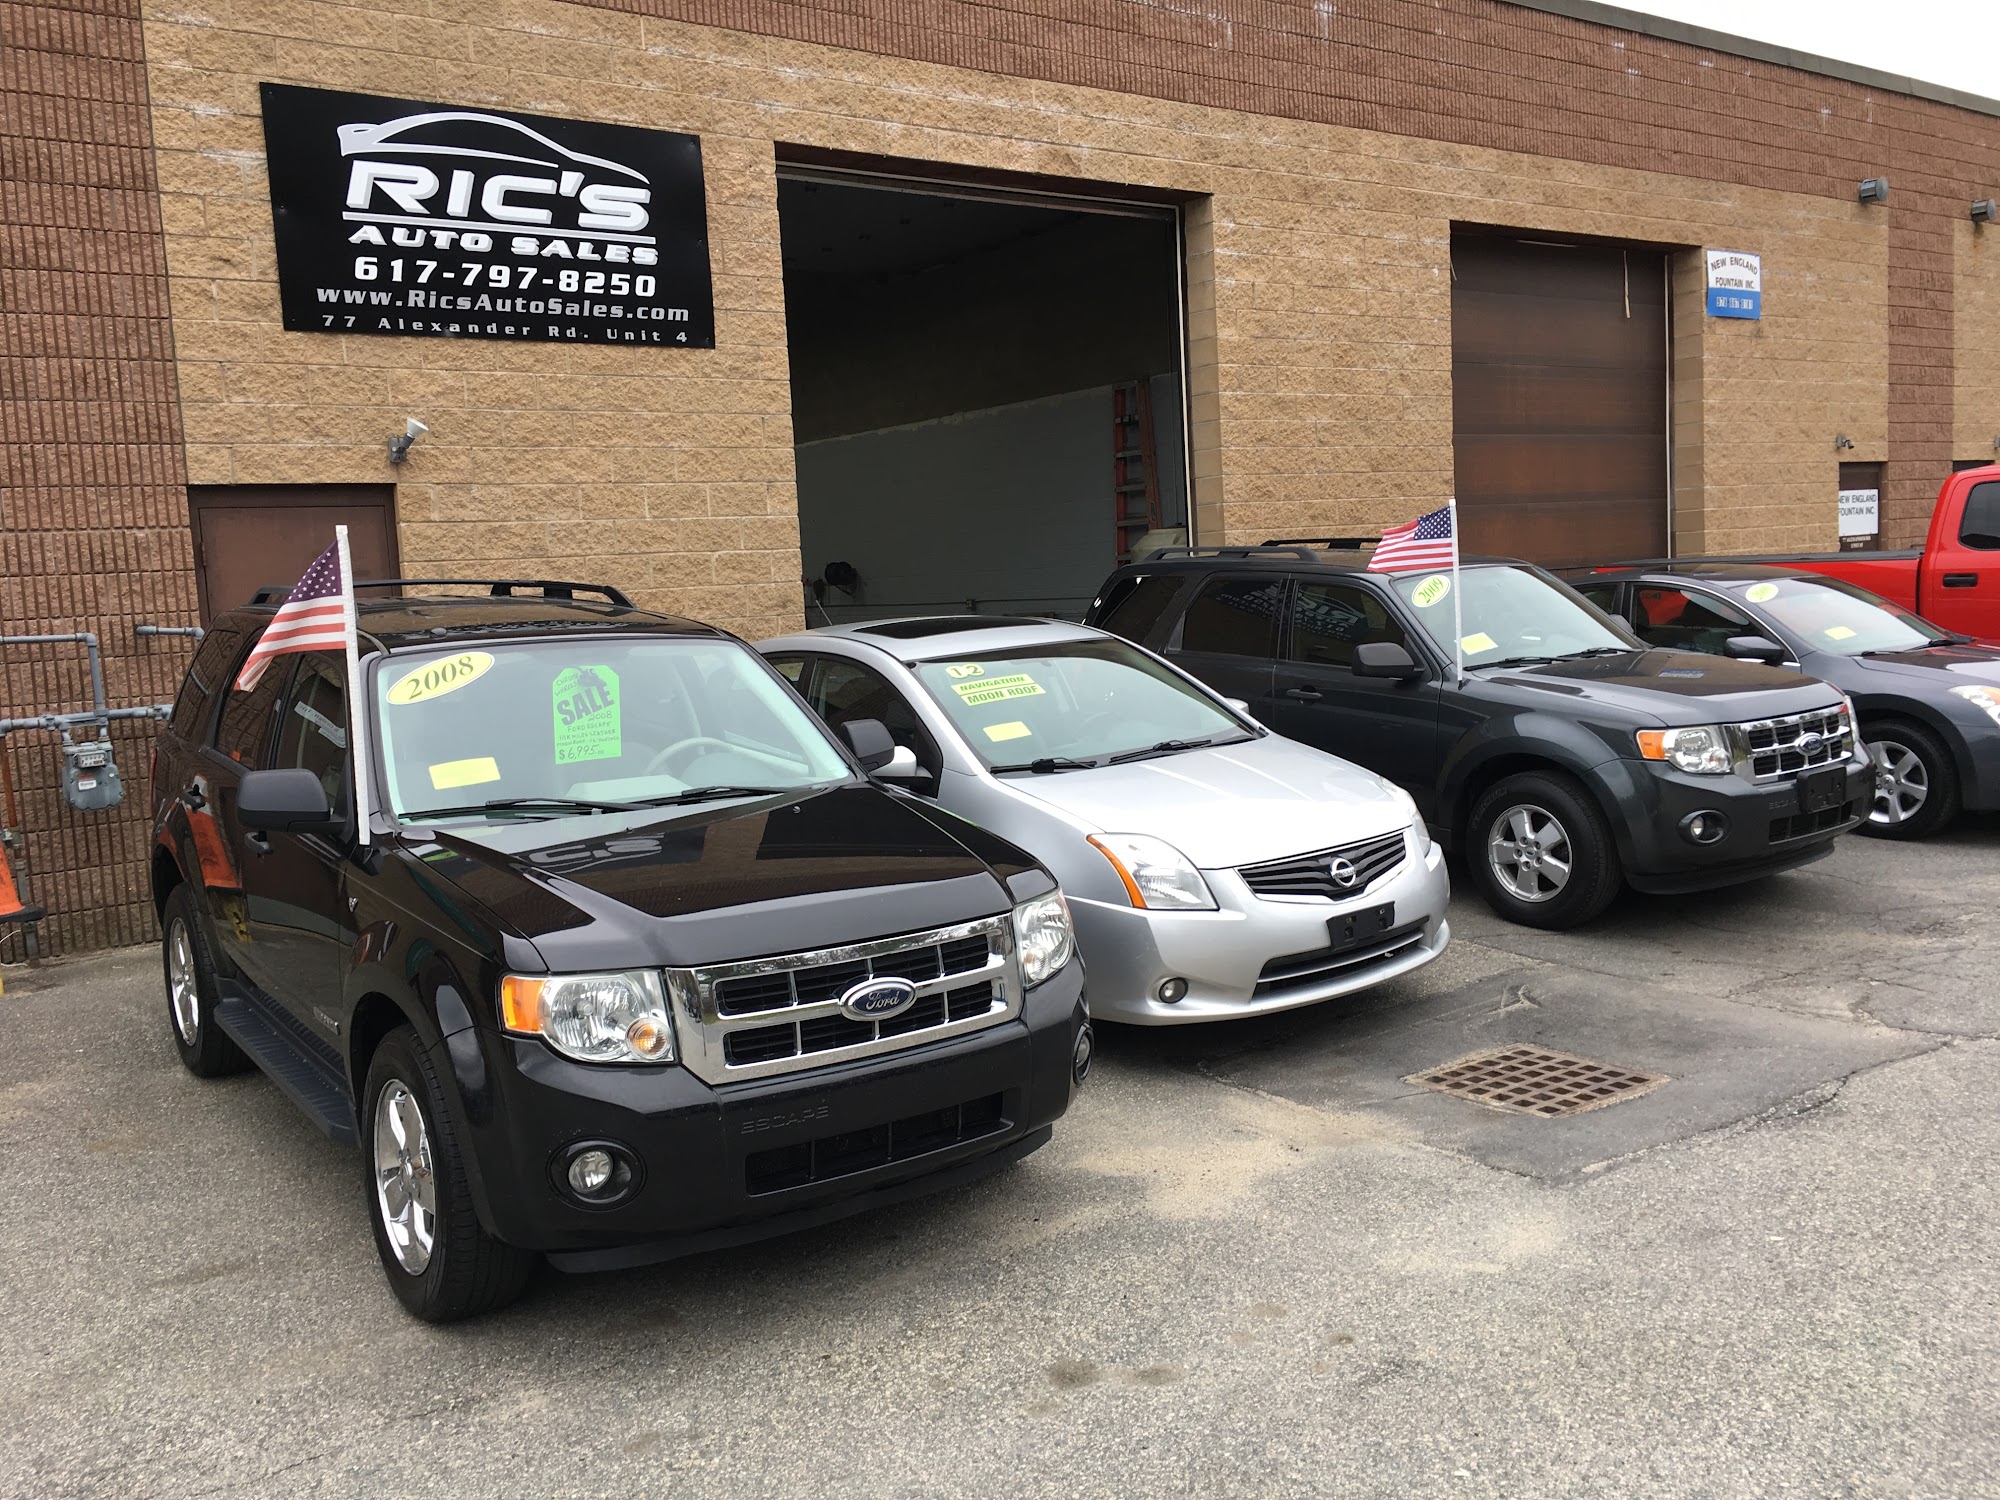 Ric's Auto Sales